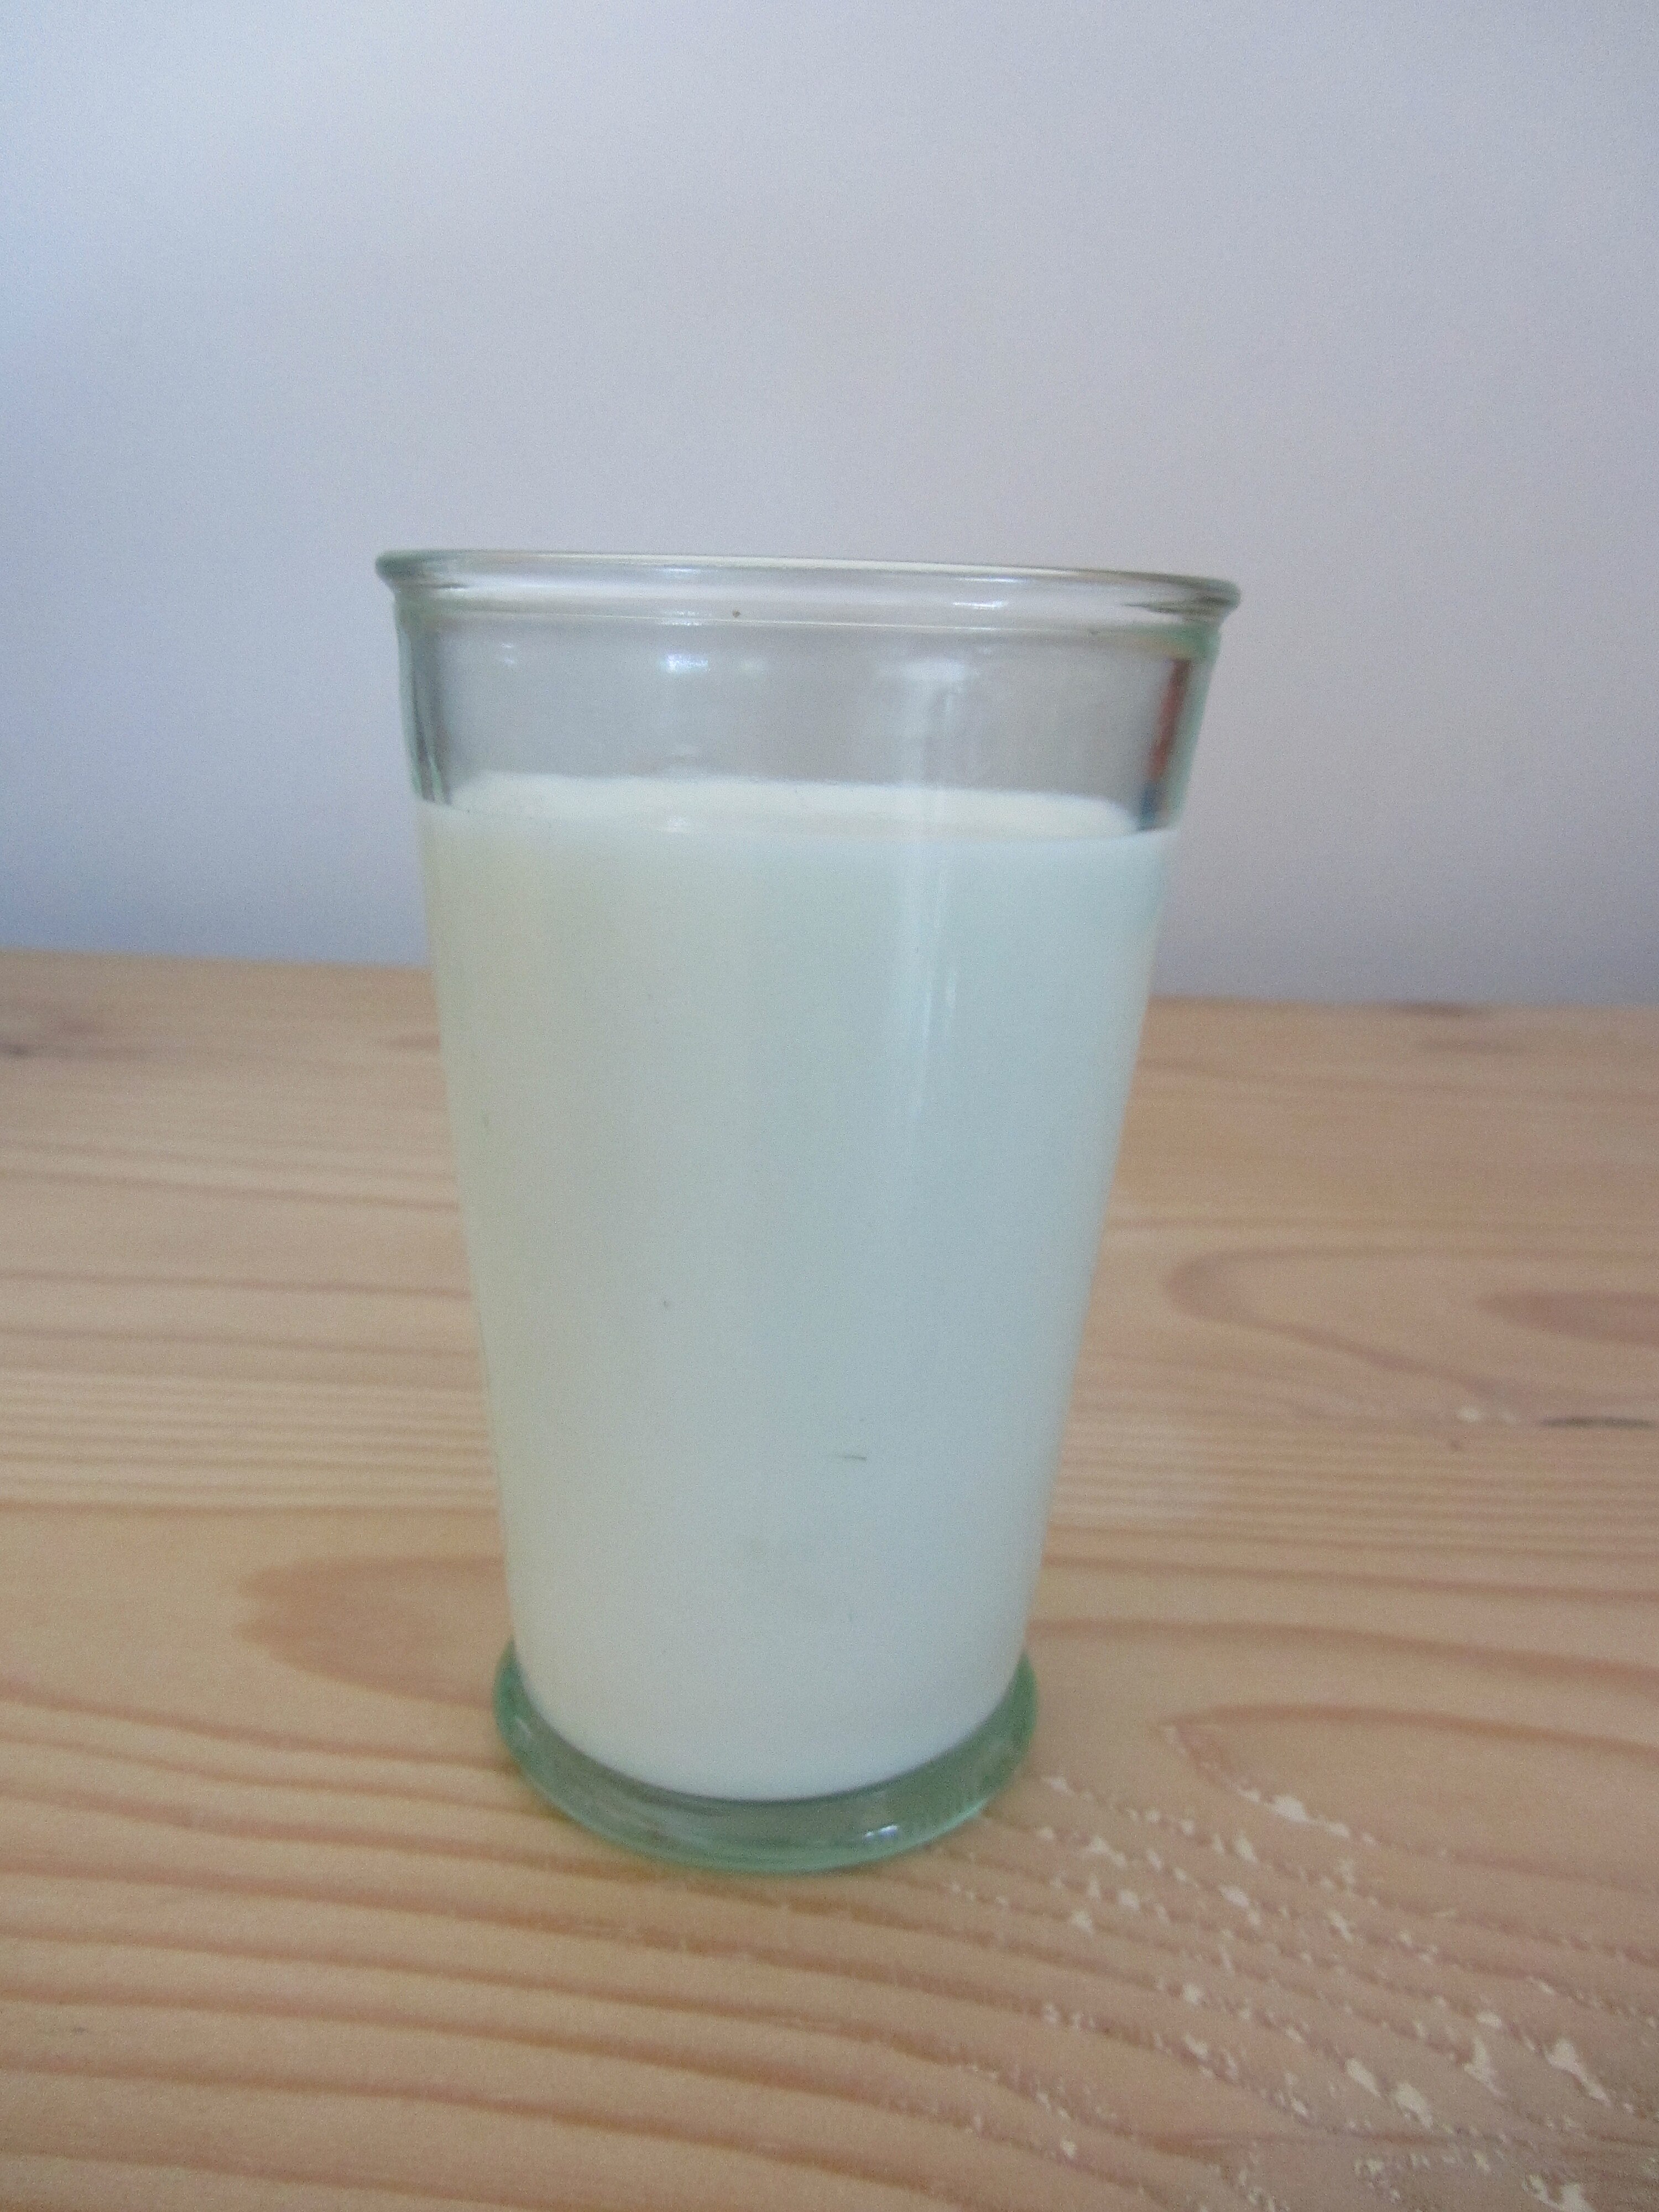 File:Milk glass.jpg - Wikipedia